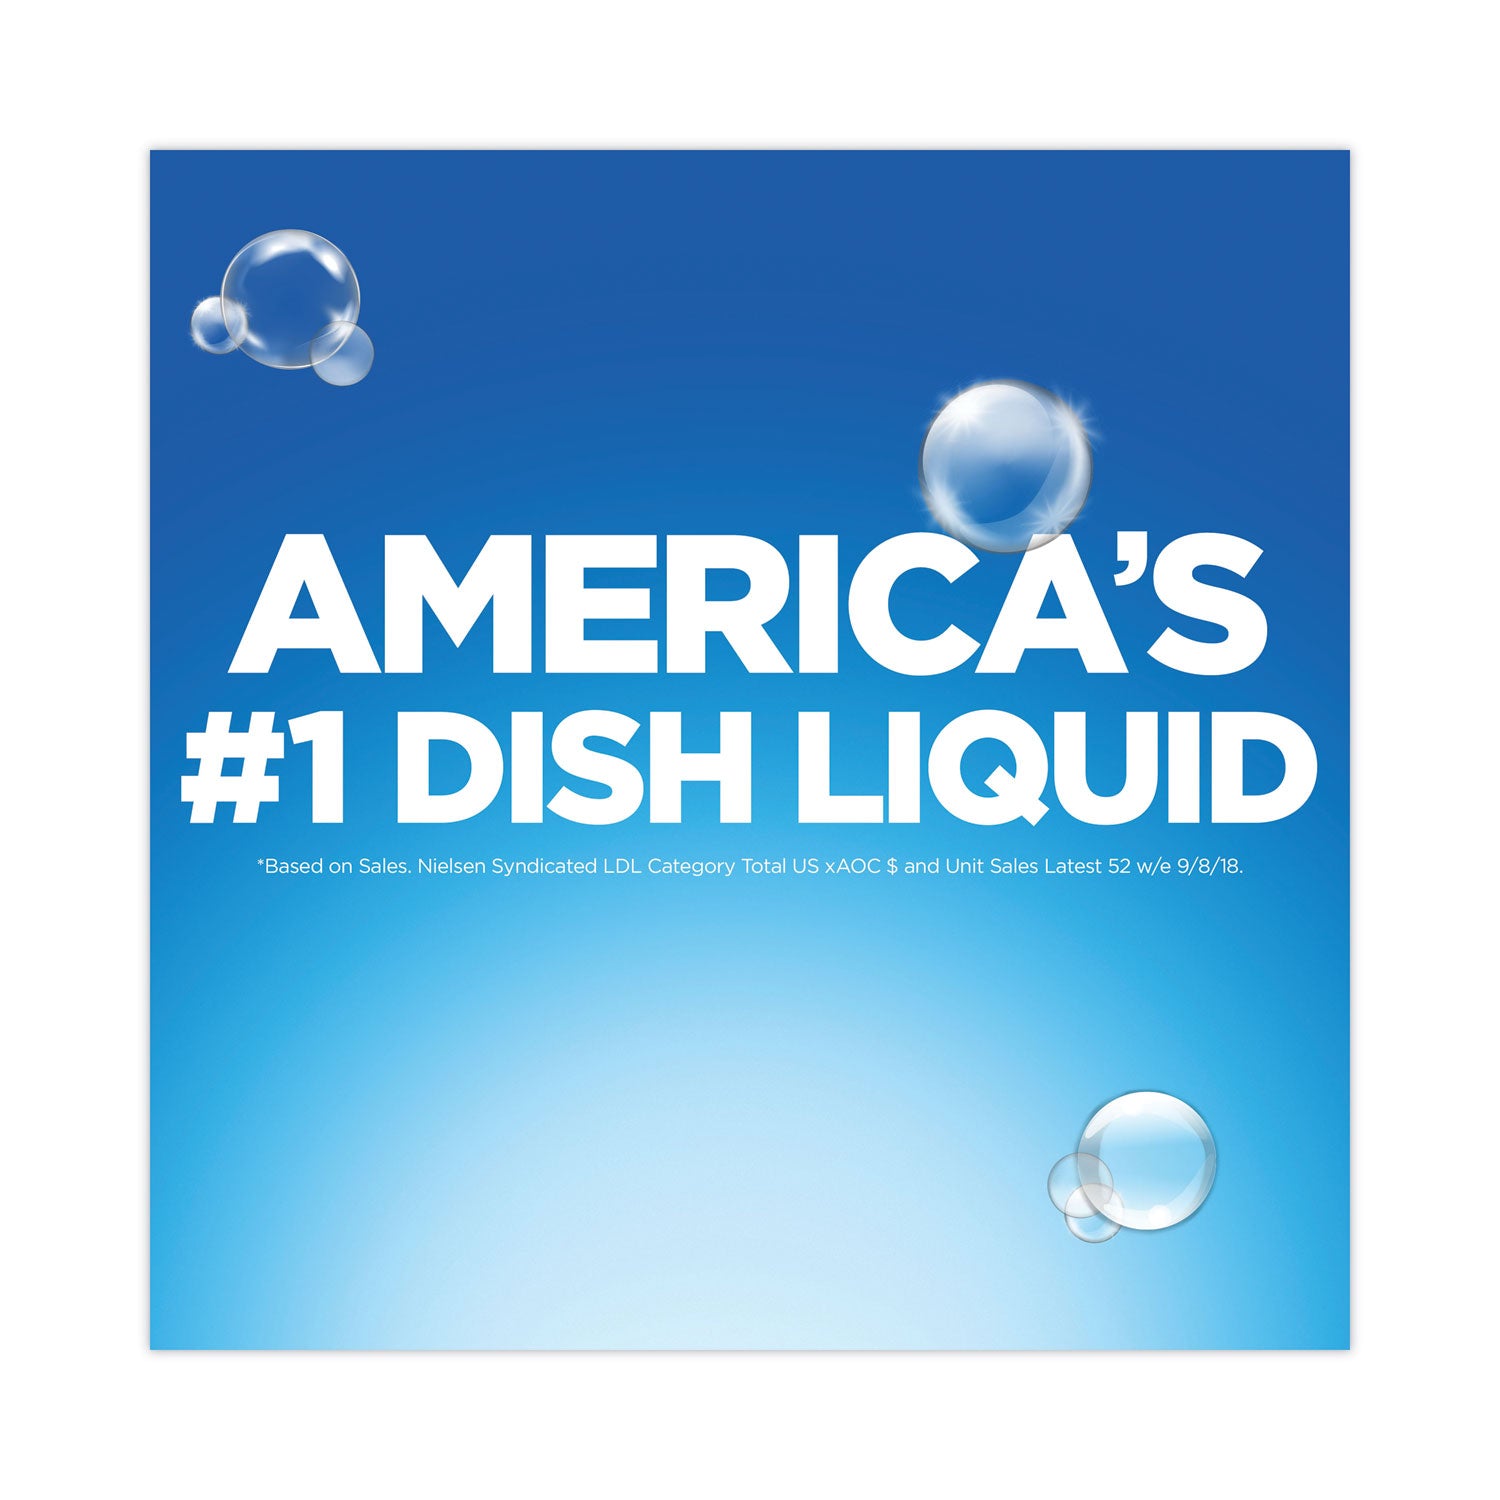 ultra-liquid-dish-detergent-dawn-original-38-oz-bottle_pgc01301ea - 5